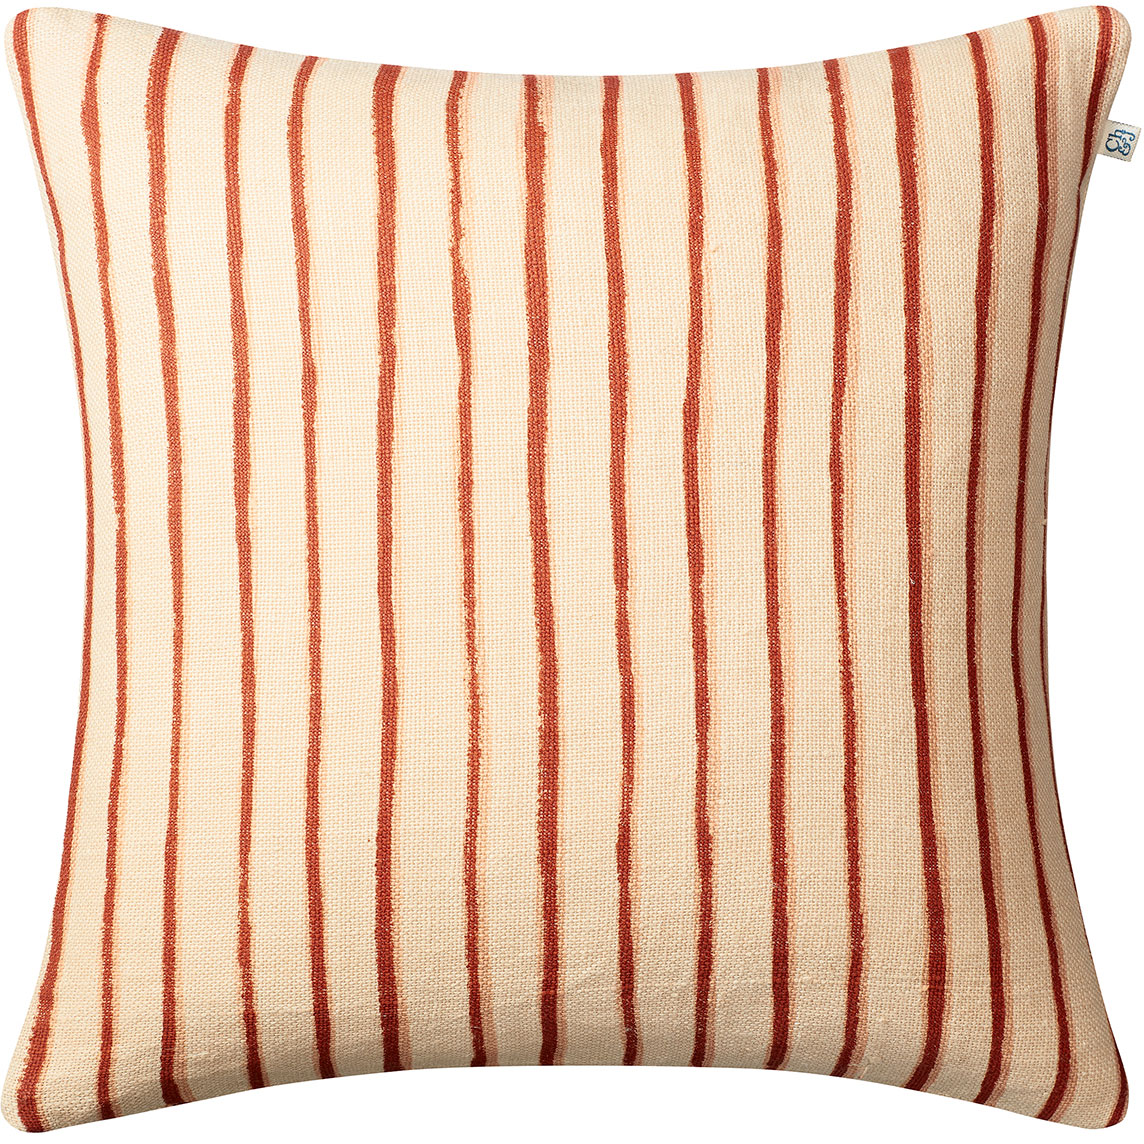 Jaipur Stripe Cushion Cover 50x50 cm, Light Beige / Apricot Orange / Rose